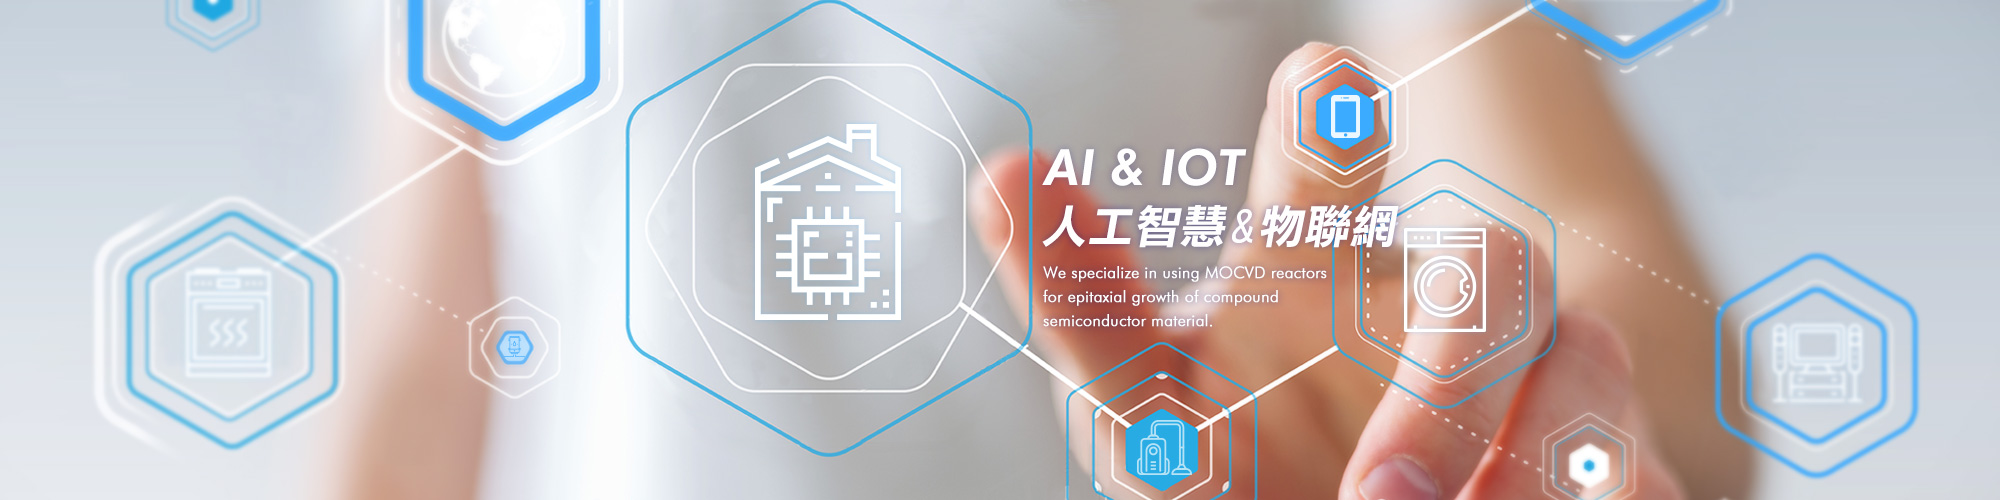 AI & IoT 人工智慧&物聯網